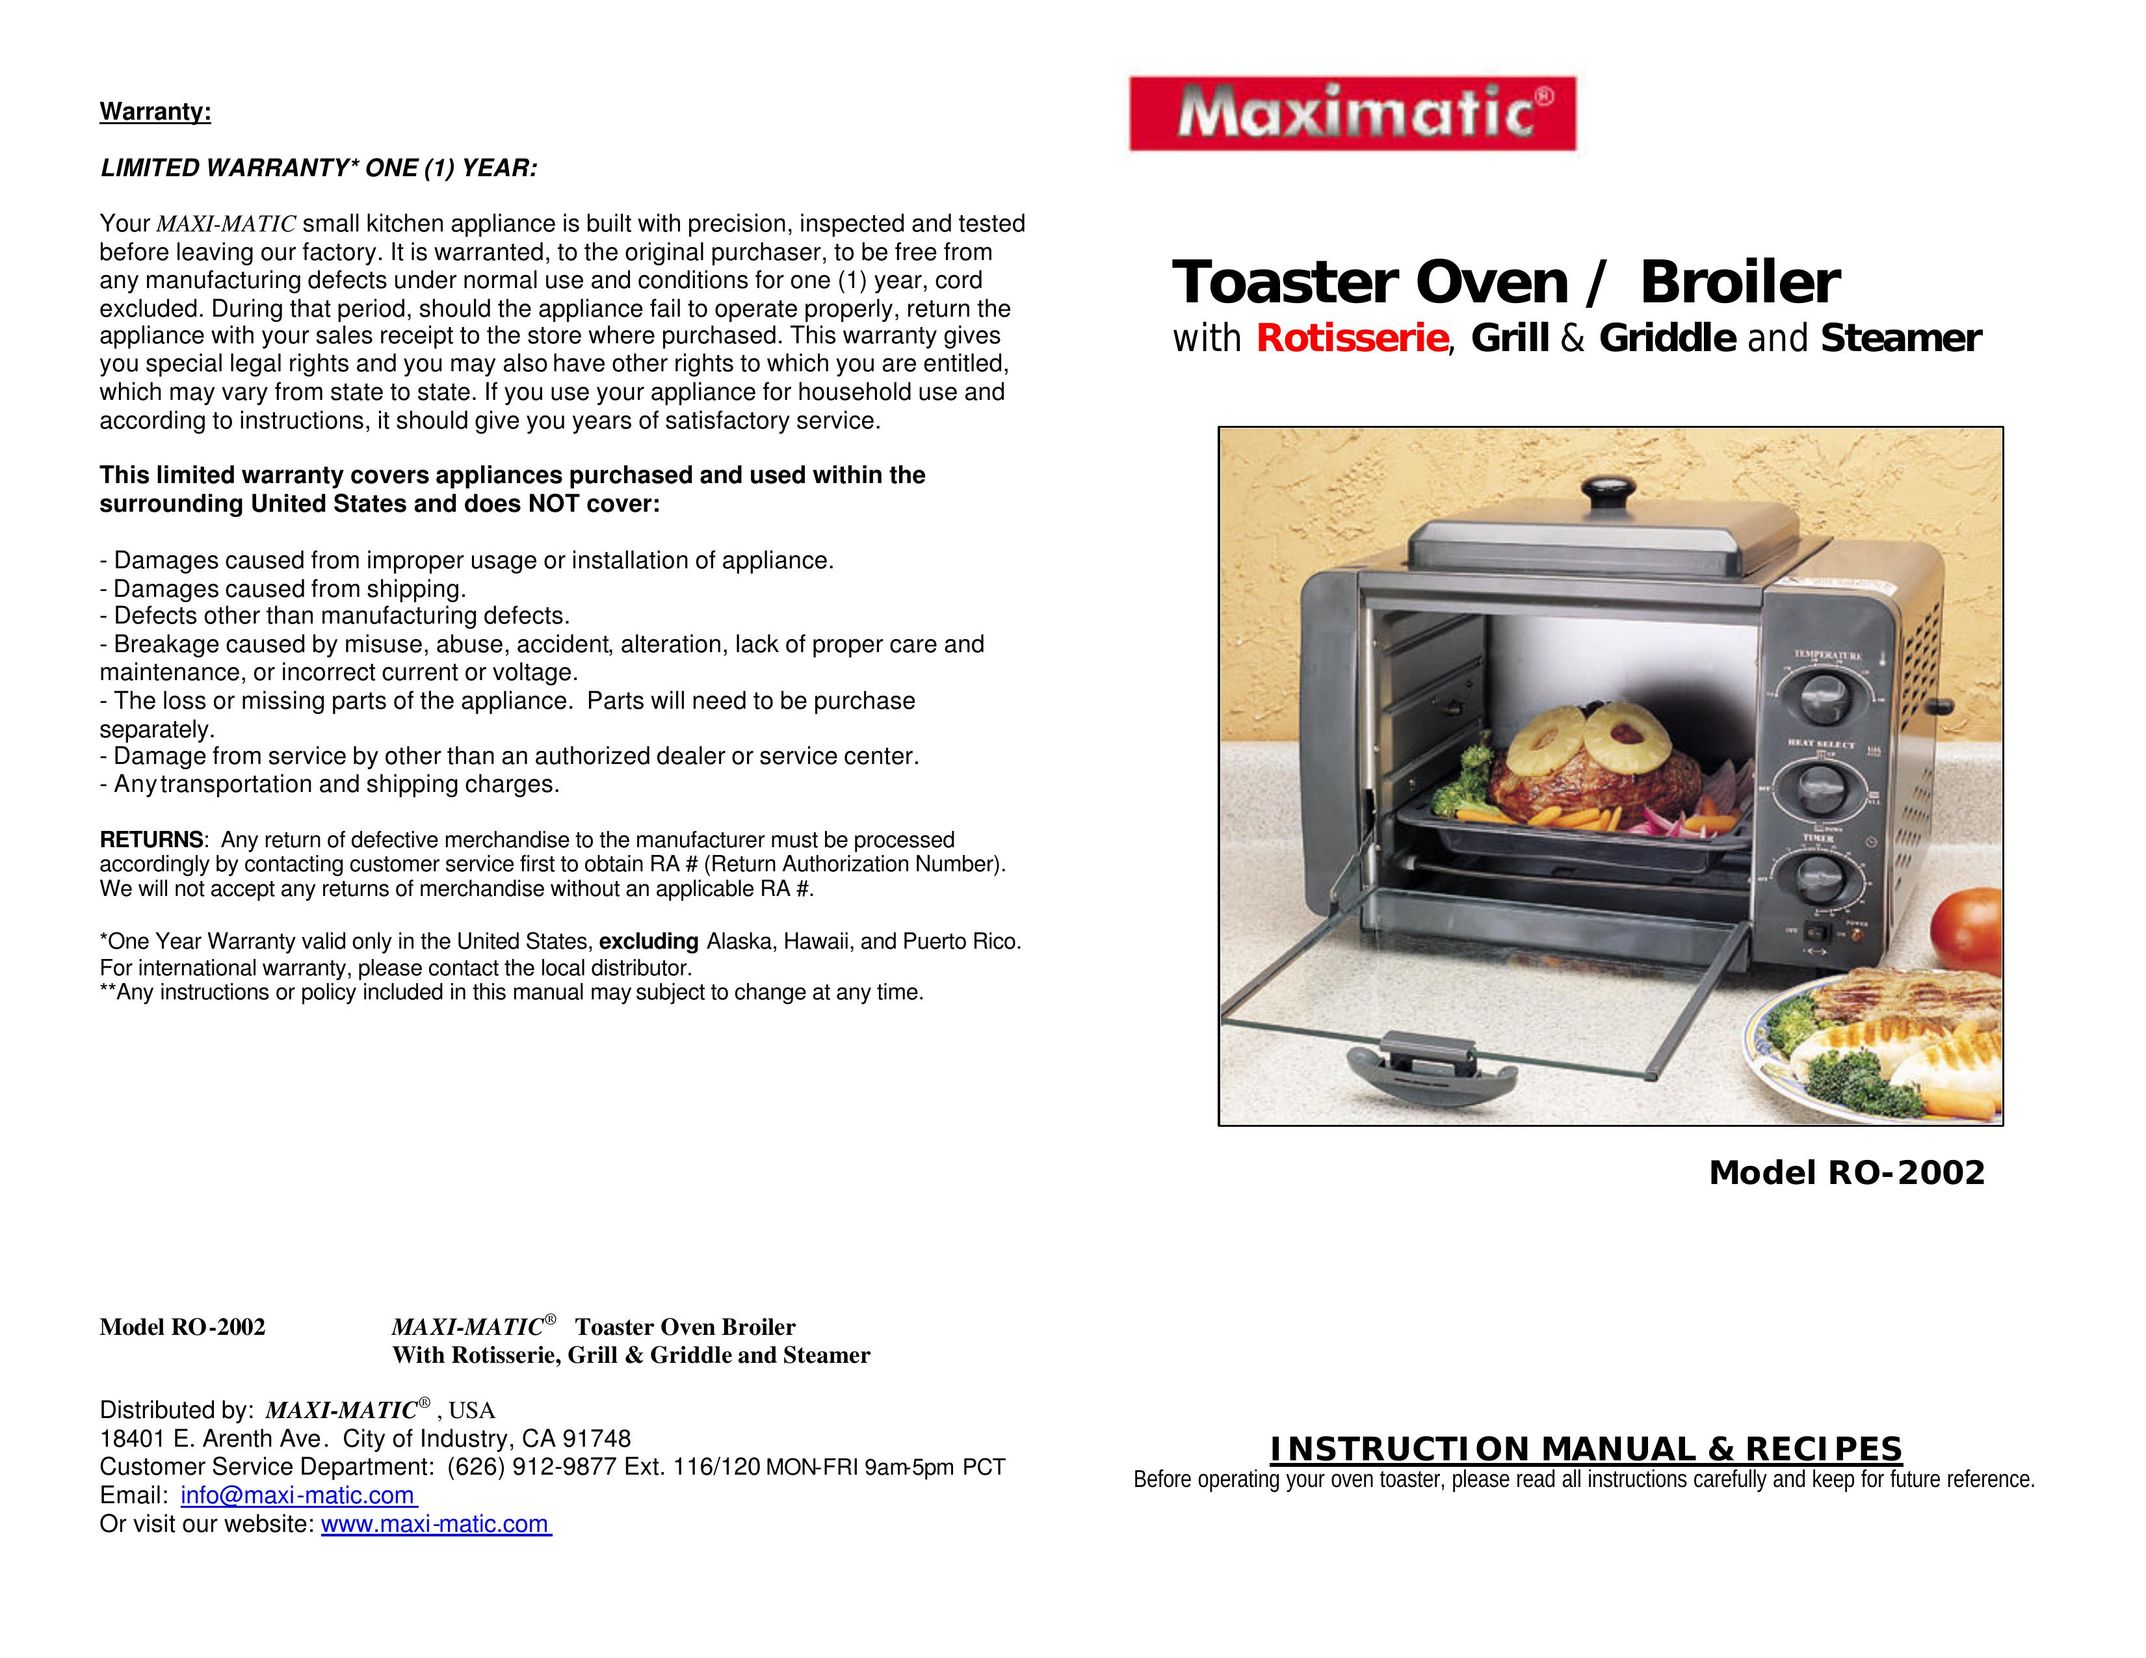 Maximatic RO-2002 Oven User Manual